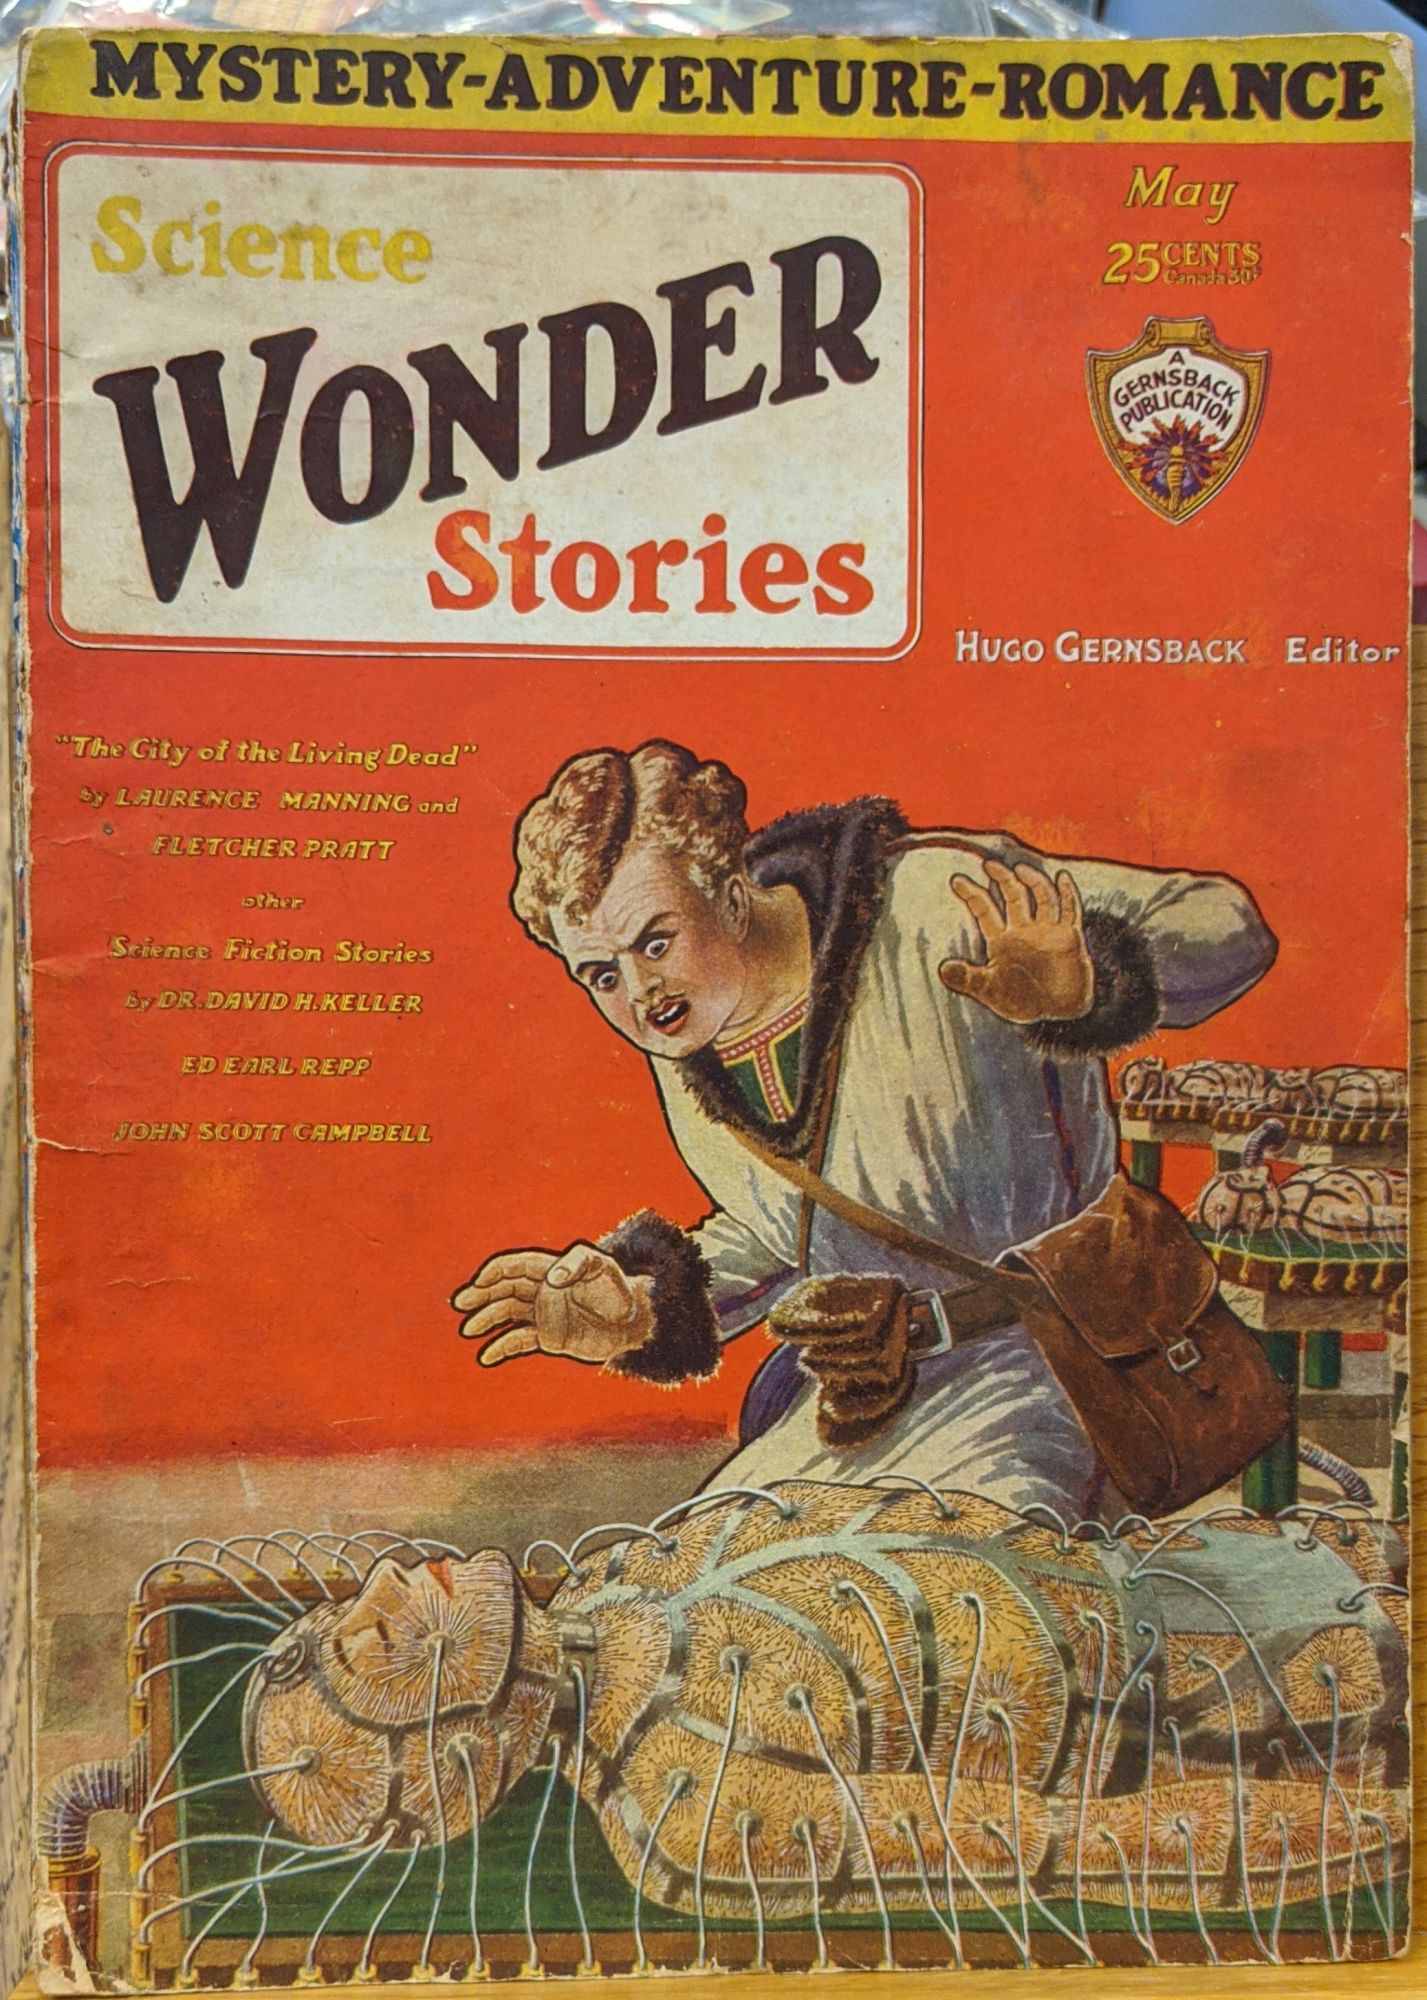 Science Wonder Stories, May 1930 by Hugo Gernsback on Moe's Books